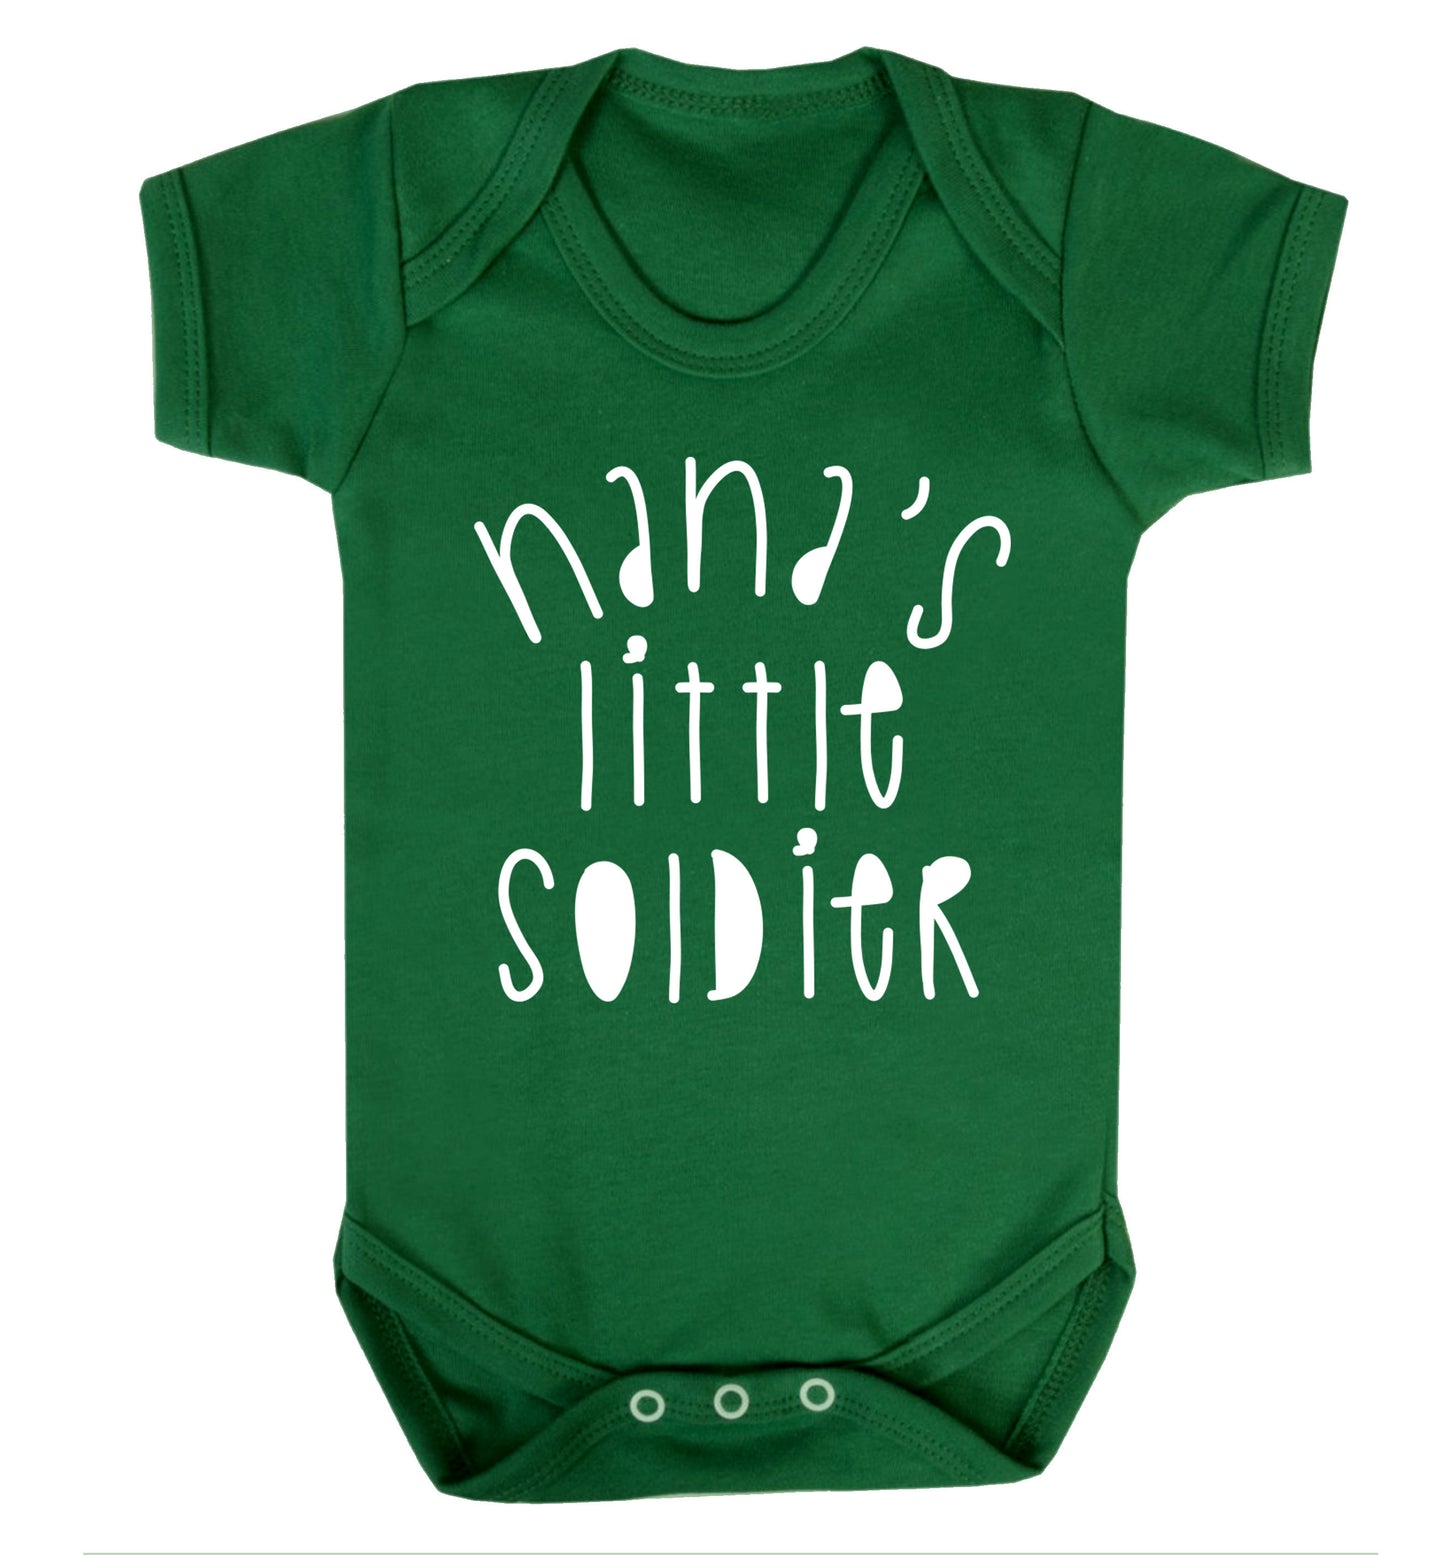 Nana's little soldier Baby Vest green 18-24 months